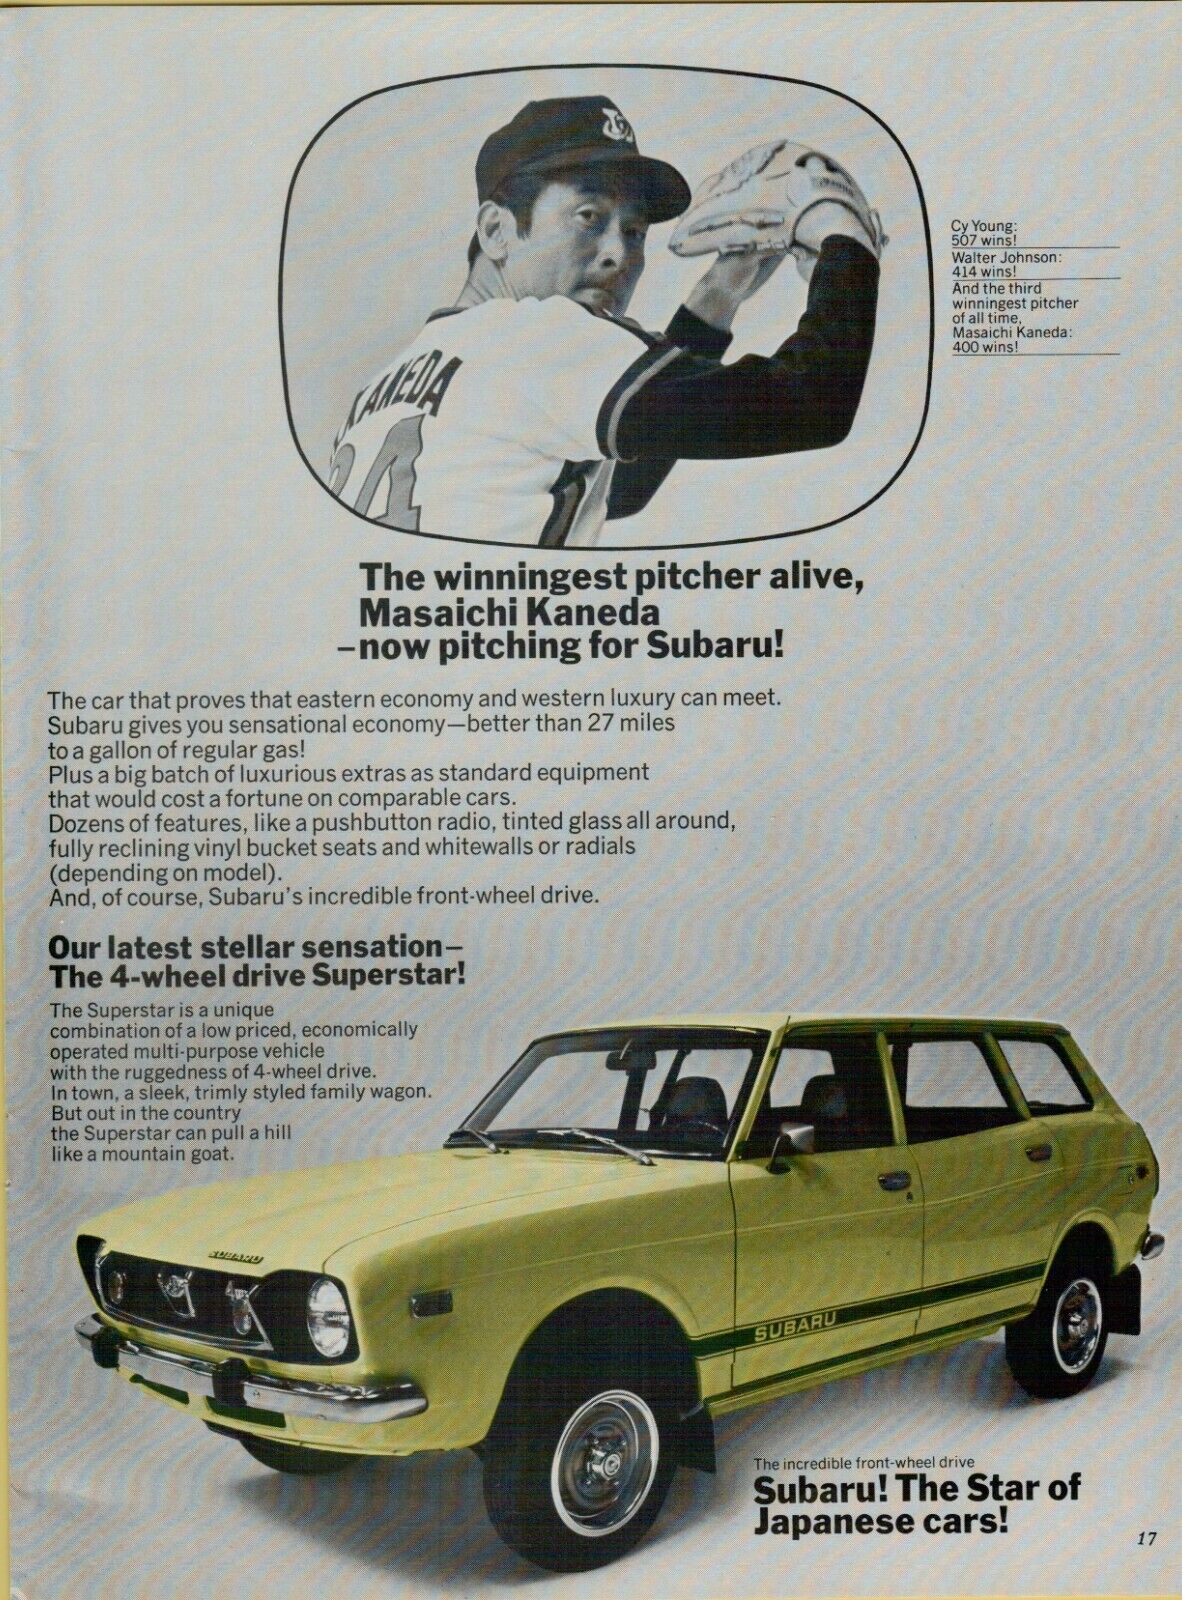 1975 Subaru 4 Wheel Drive Superstar Masaichi Kaneda Pitcher VINTAGE PRINT AD